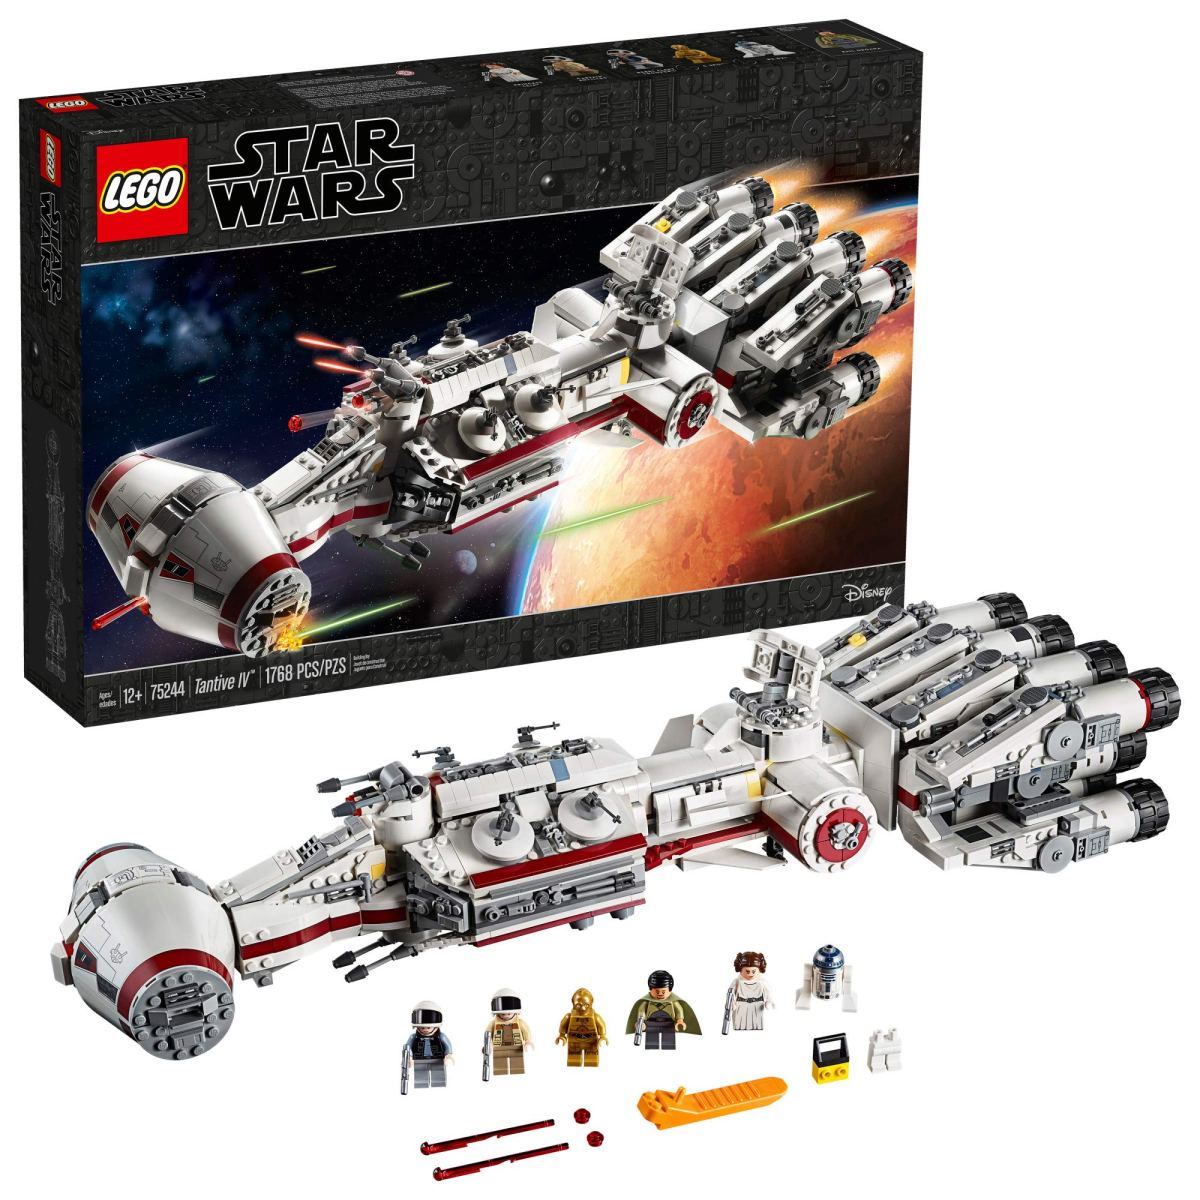 LEGO Star Wars Tantive IV set